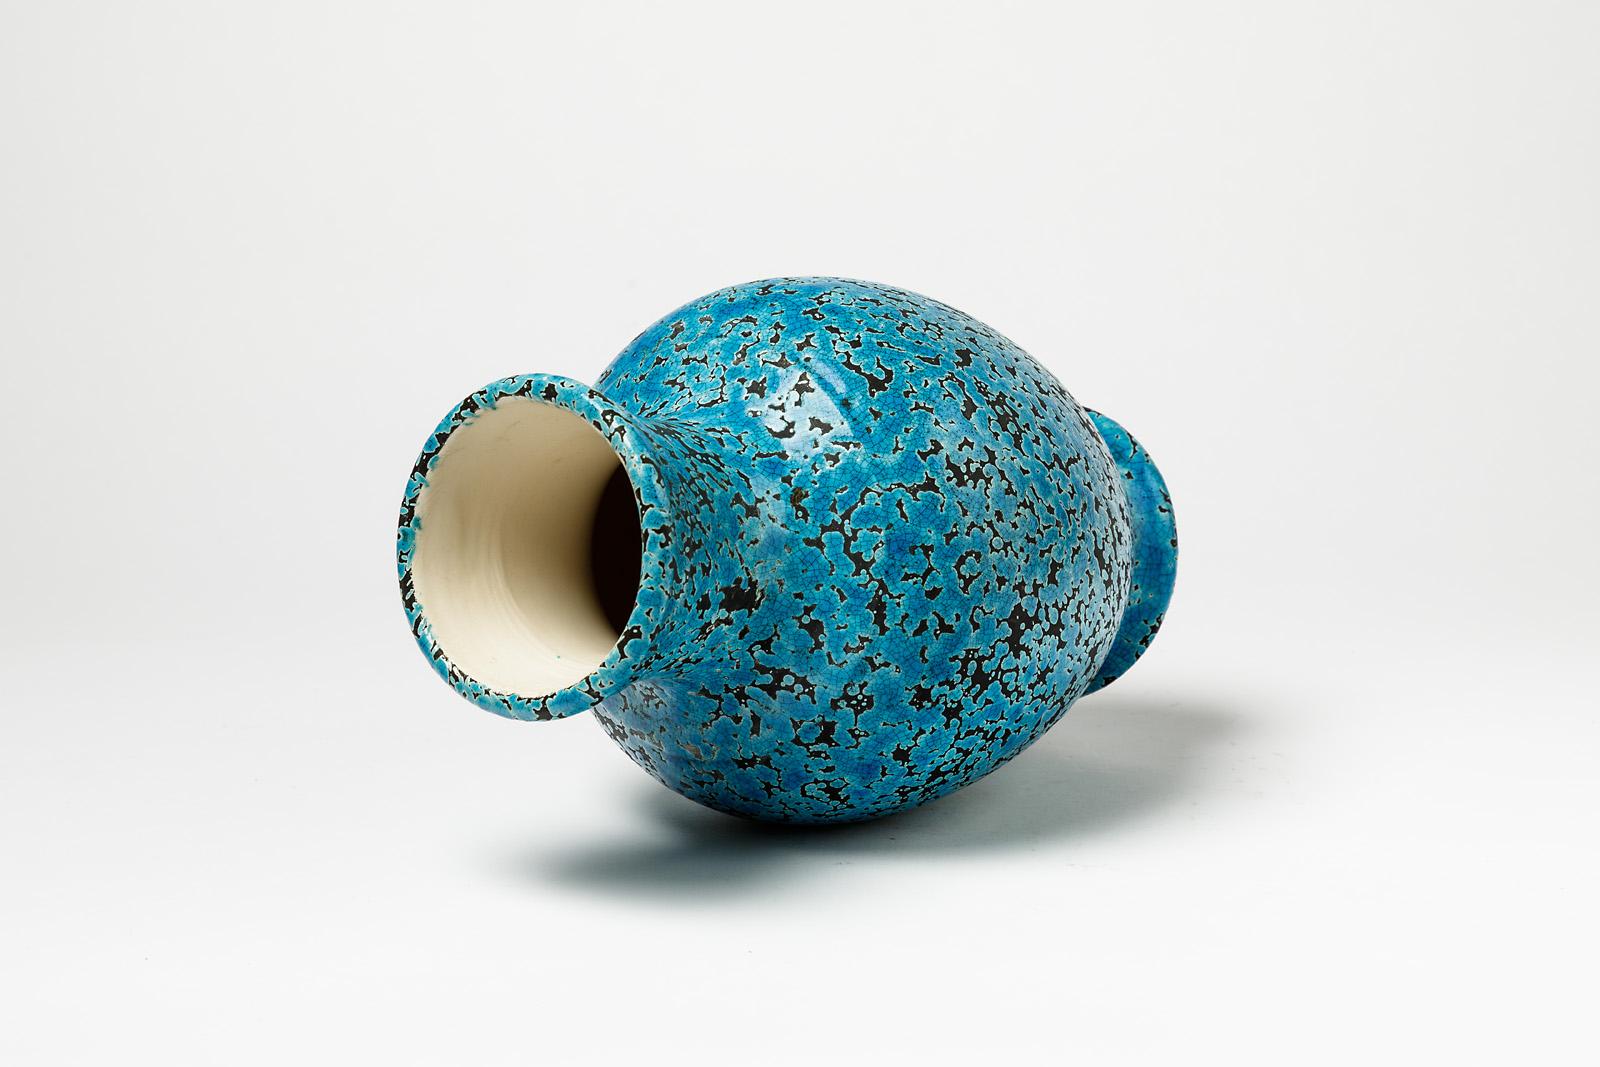 20th Century Decorative and Precious Midcentury Ceramic Blue Vase, Dated 1965 For Sale